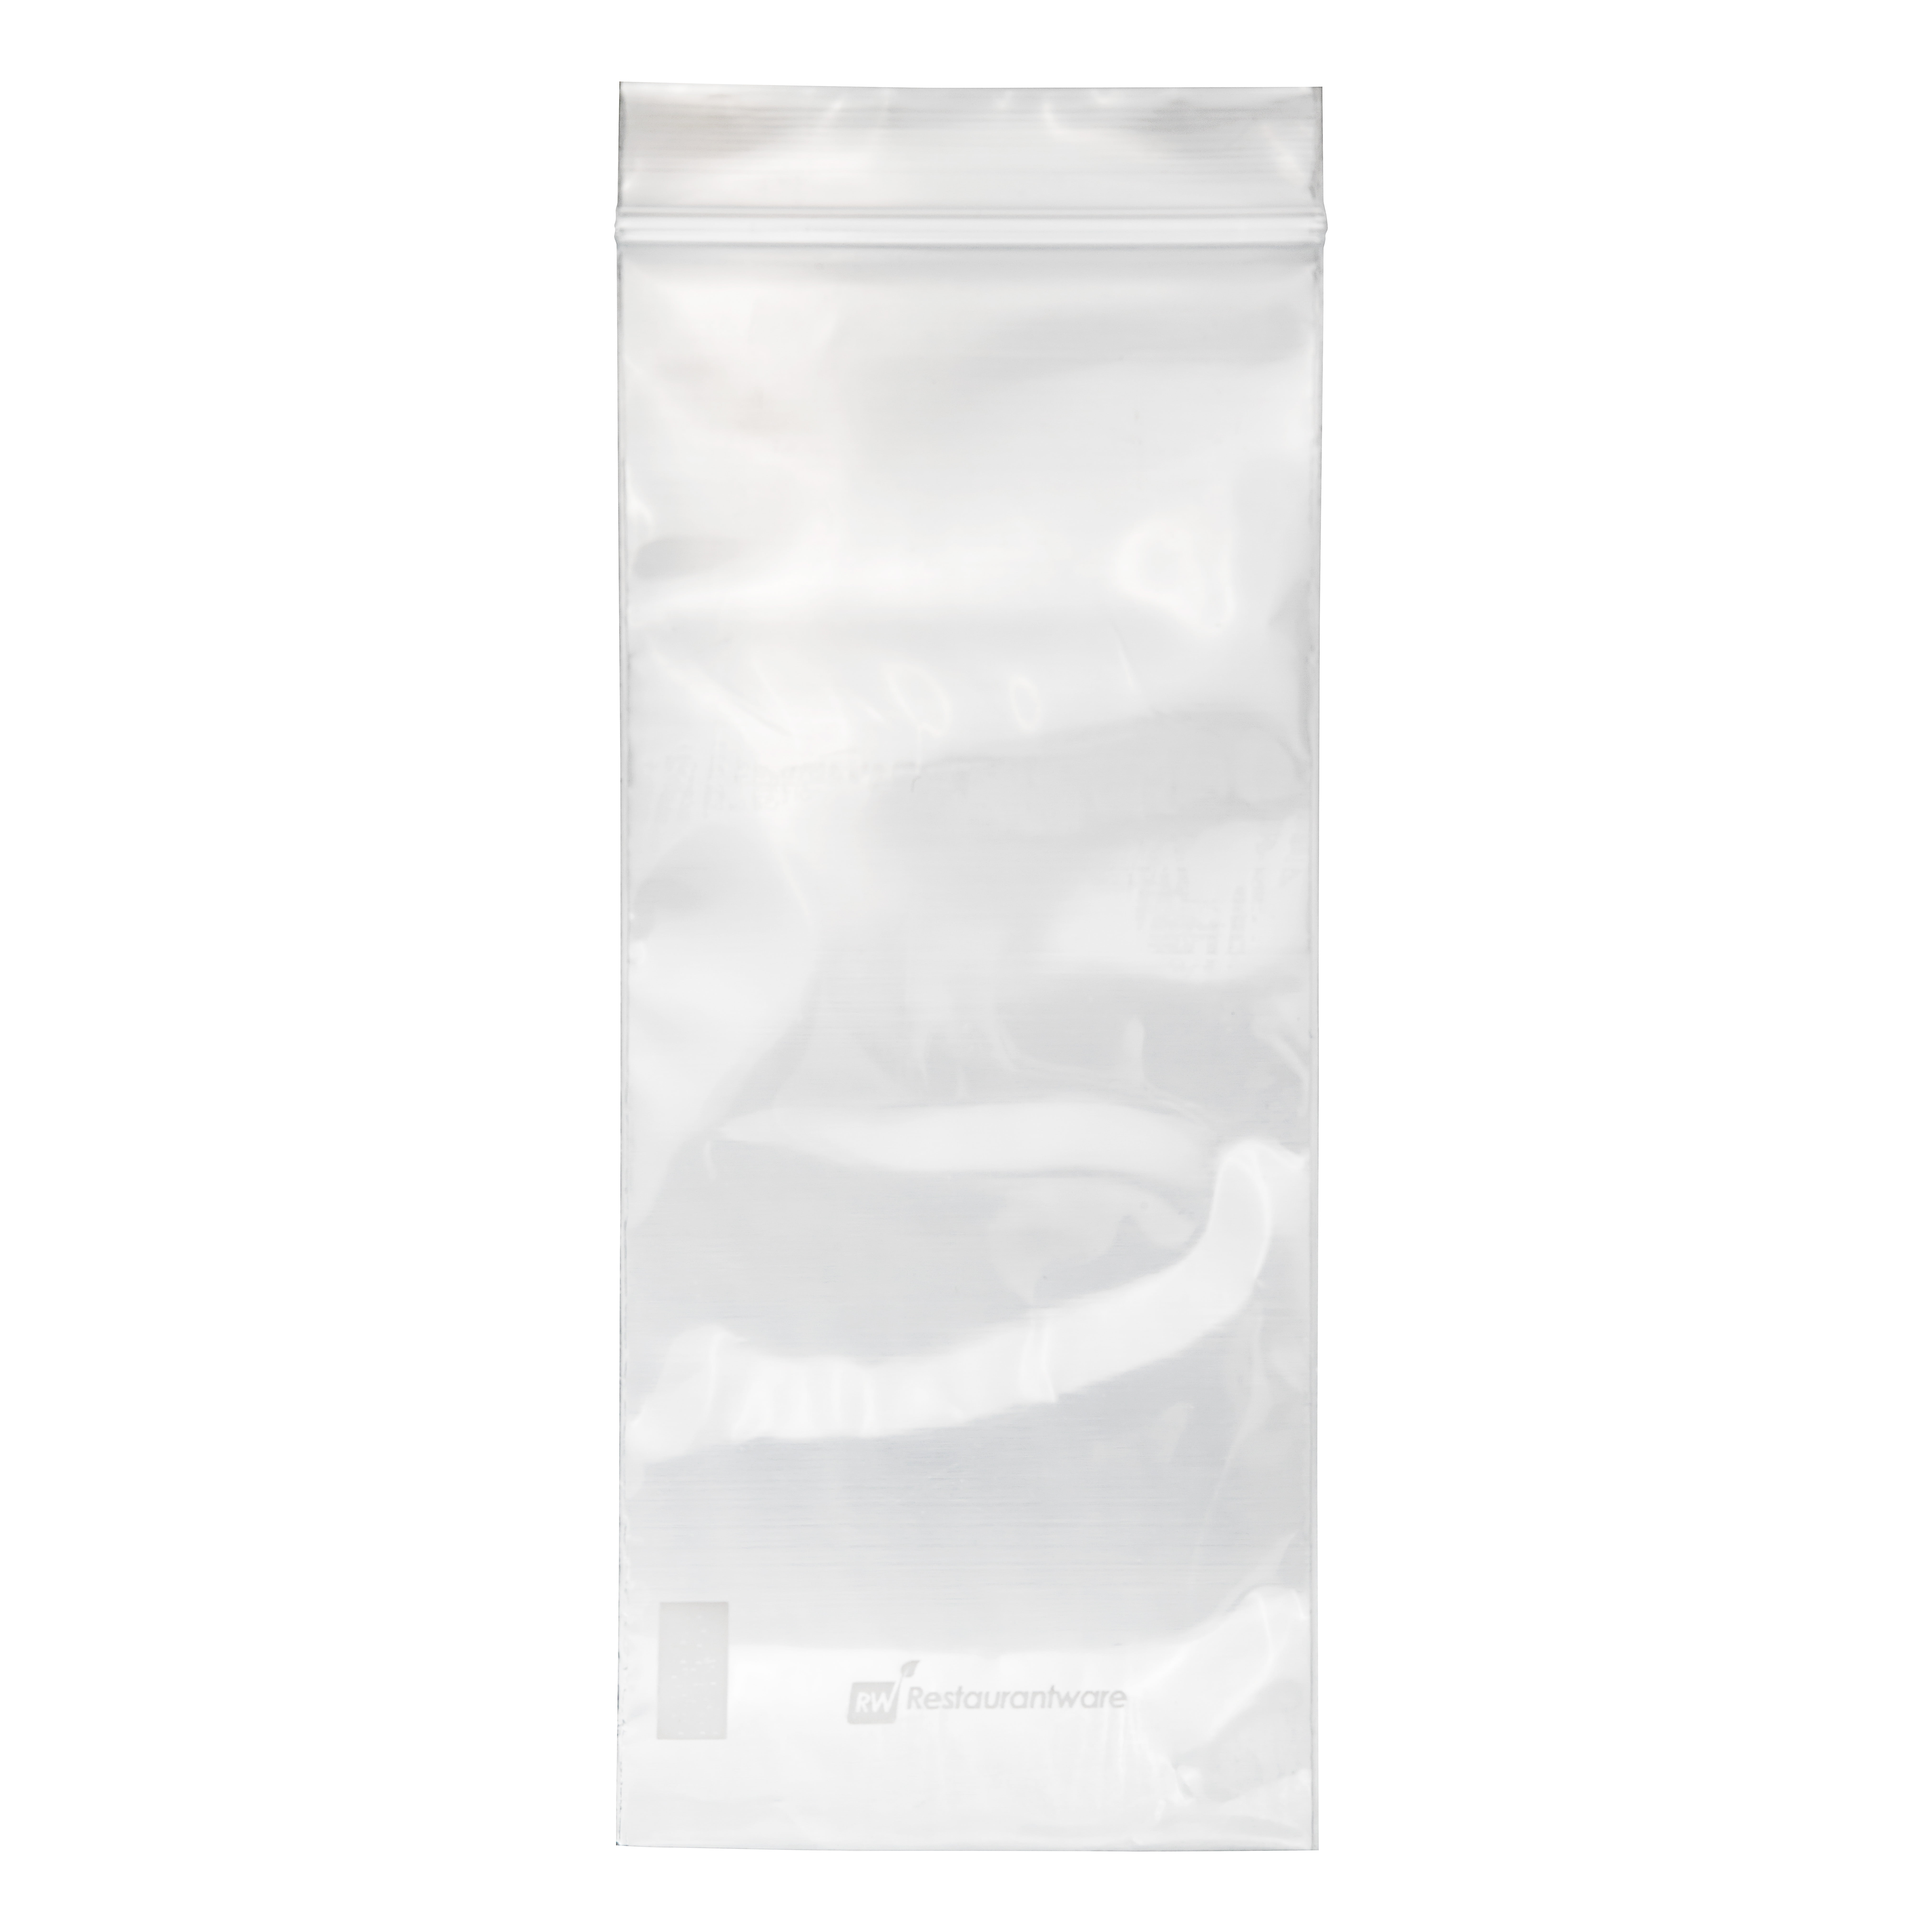 Bag Tek 1 qt Clear Plastic Freezer Bag - Double Zipper, Write-On Label,  BPA-Free - 7 1/2 x 7 - 1000 count box